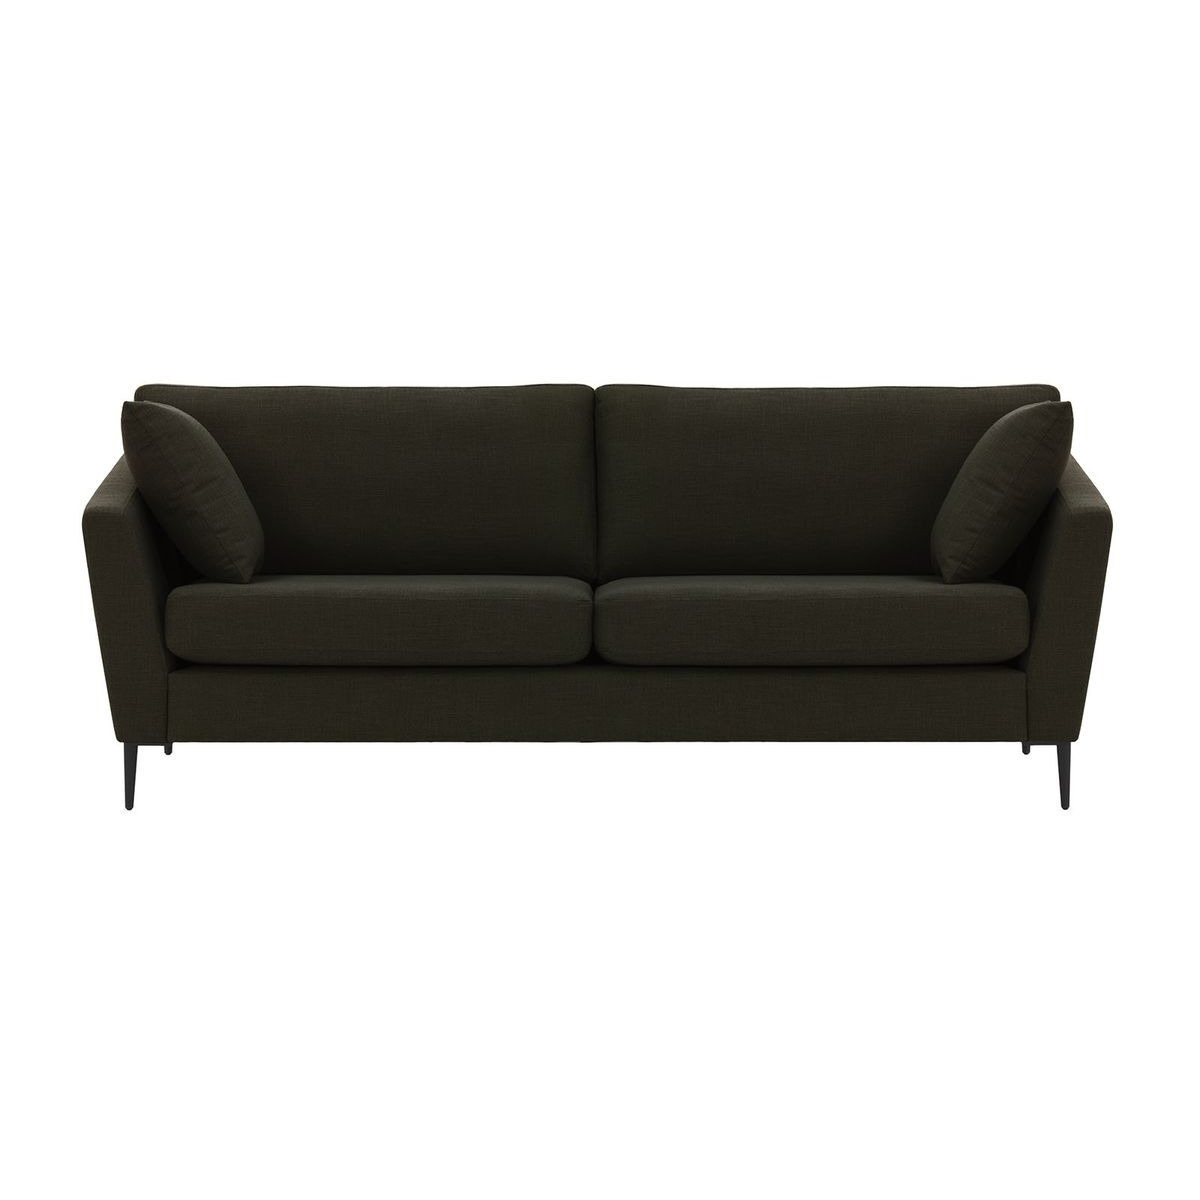 Imani 3 Seater Sofa, brown - image 1